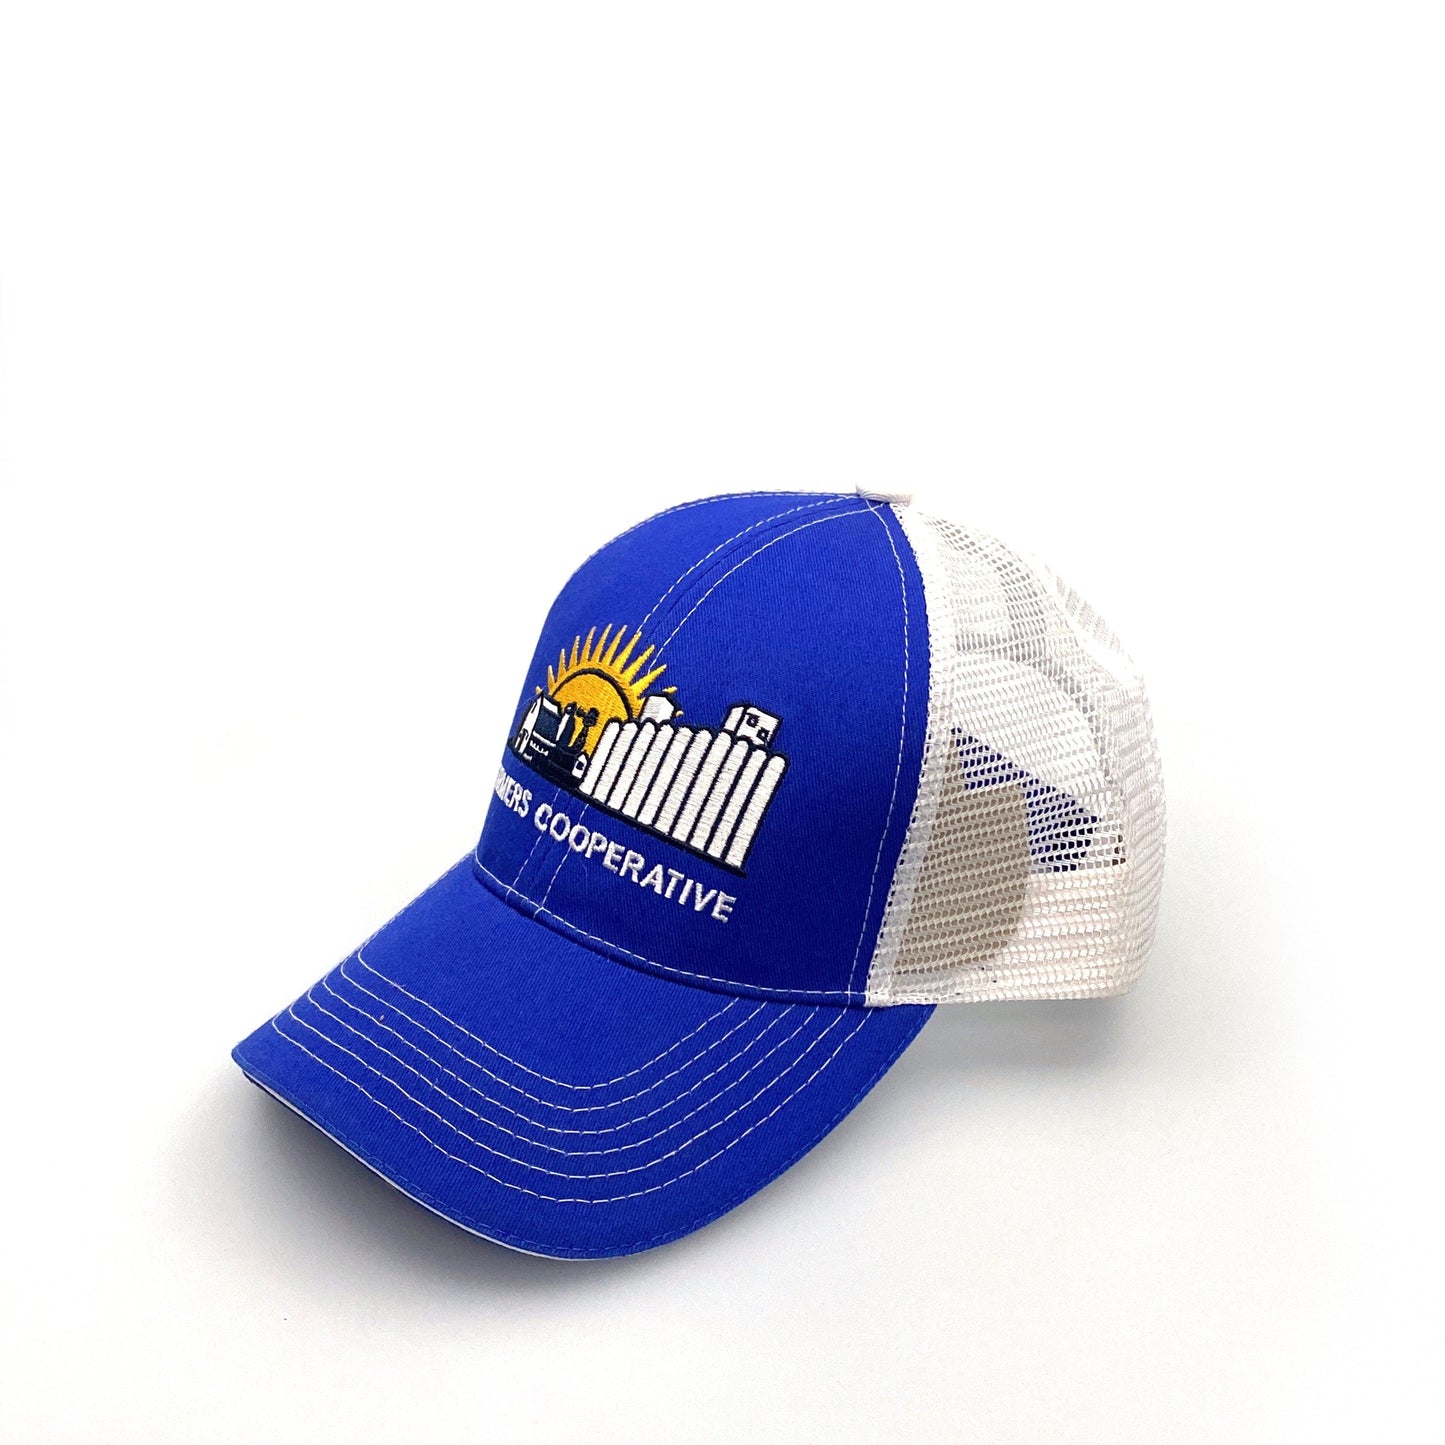 JF Beaver Farmers Cooperative Hat Adjustable OS Blue White Baseball Cap NEW